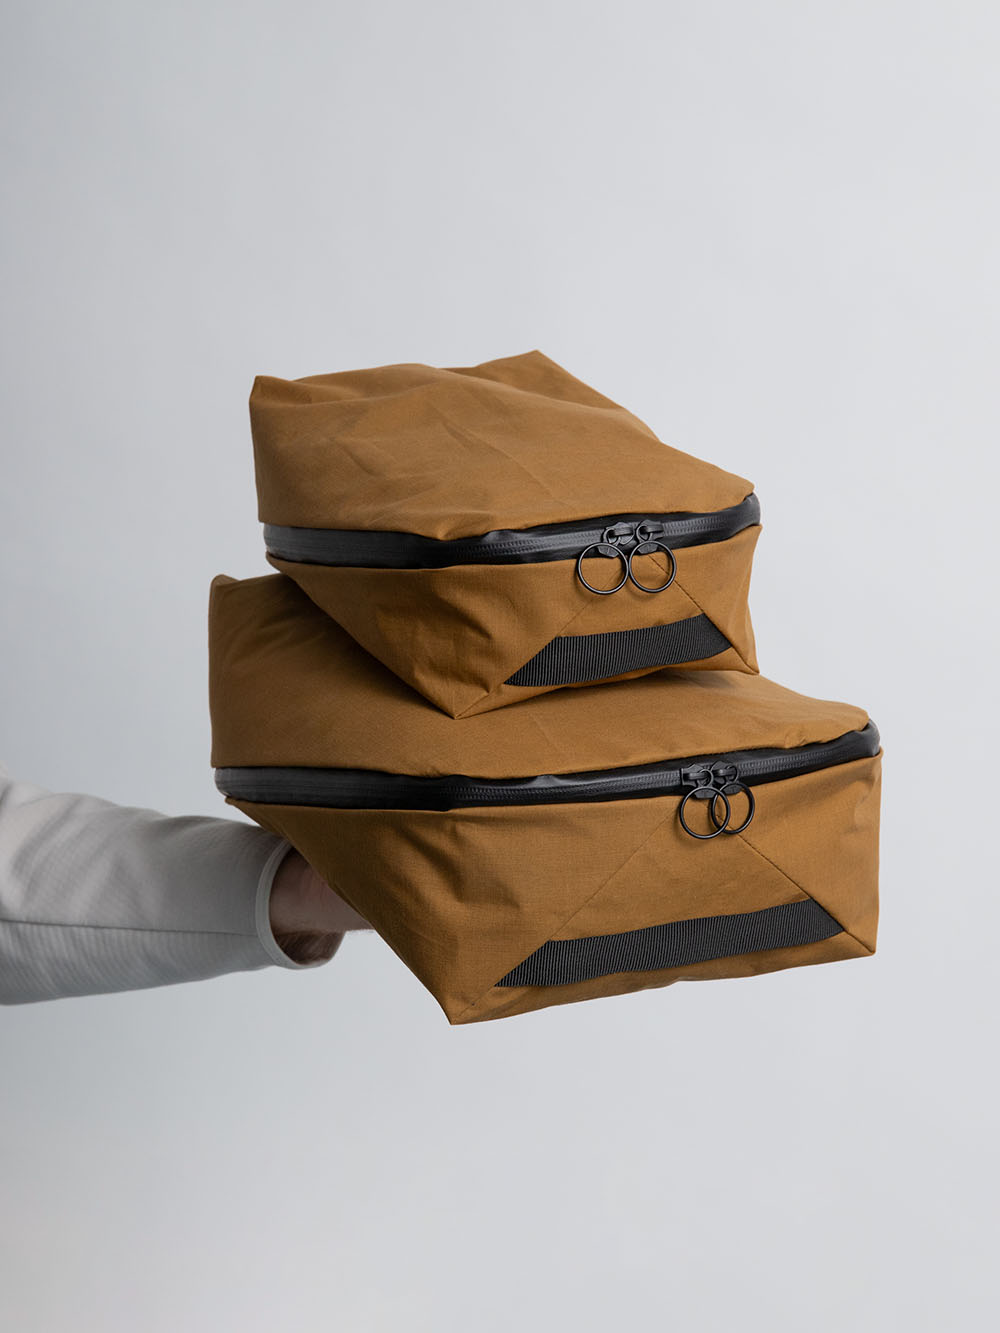 Trakke Droma 22 Duffle Bag : Amazon.com.au: Sports, Fitness & Outdoors